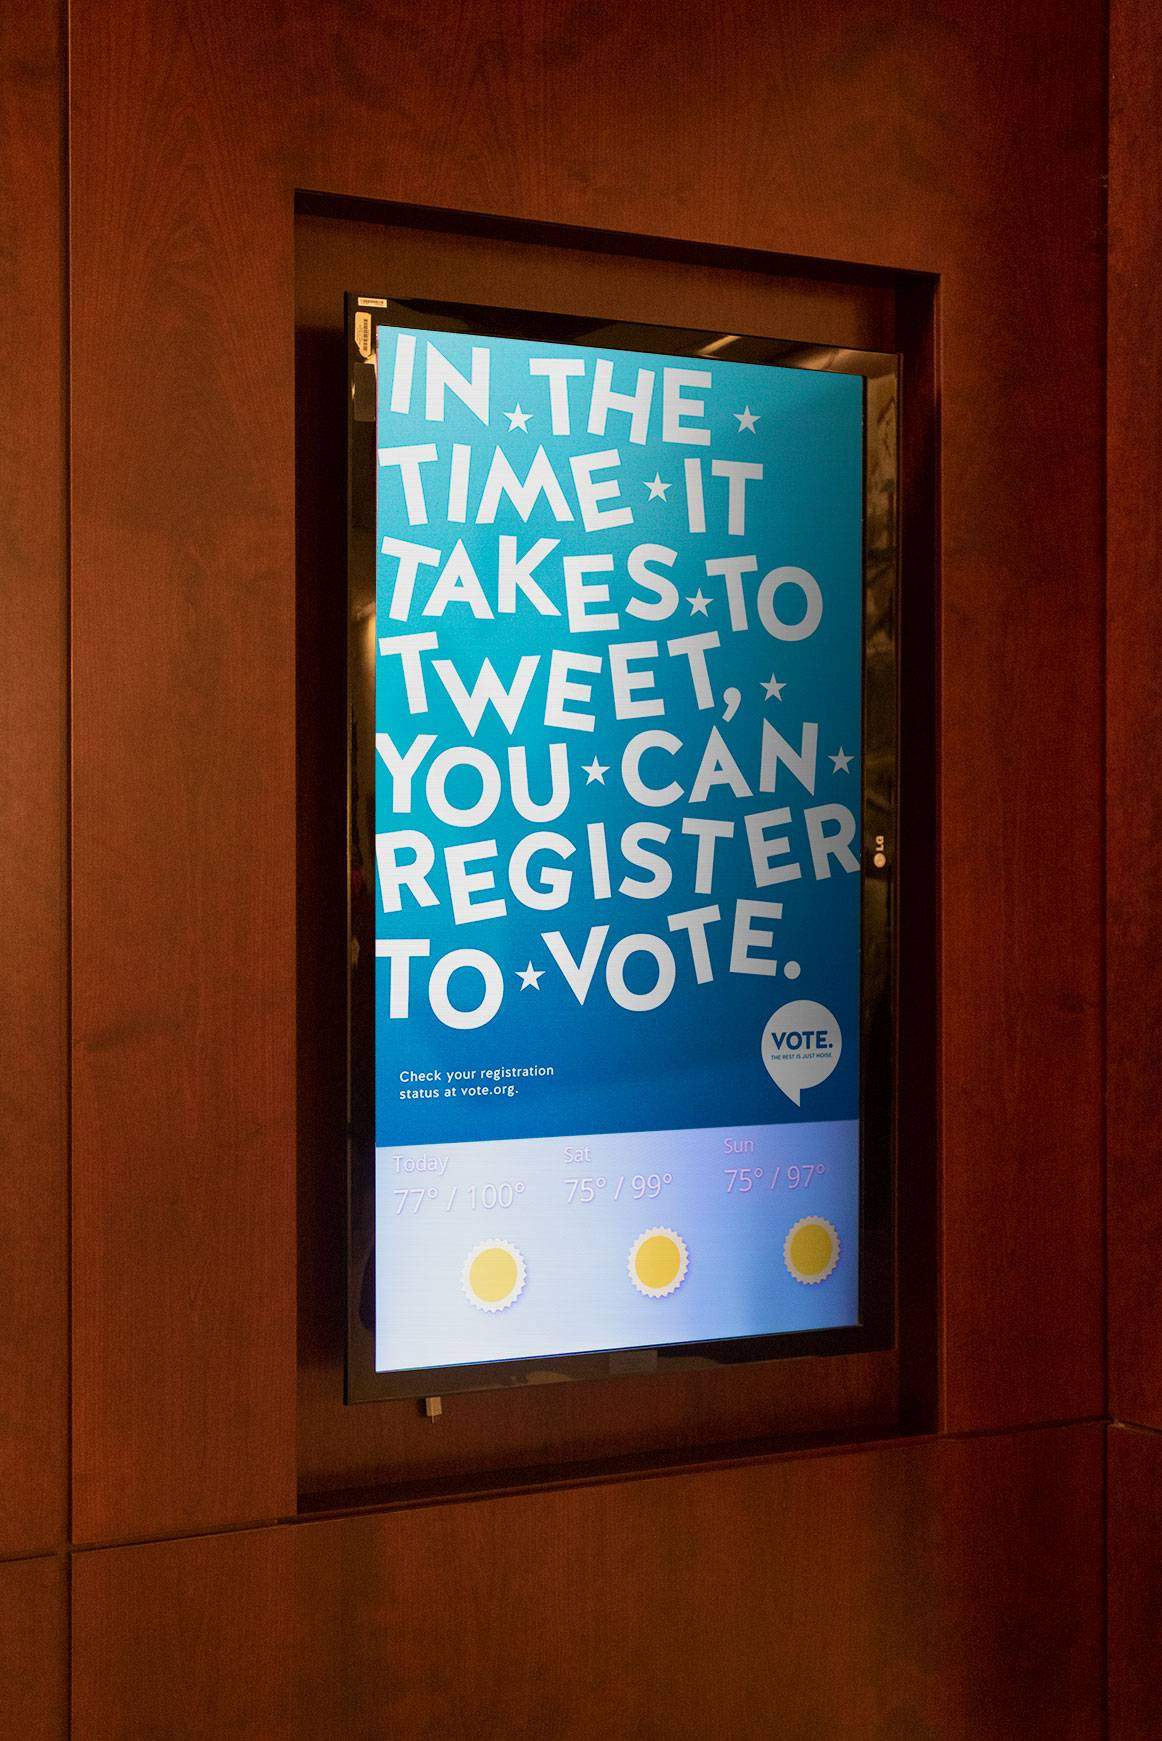 Vote campaign poster displayer on a digital sign.